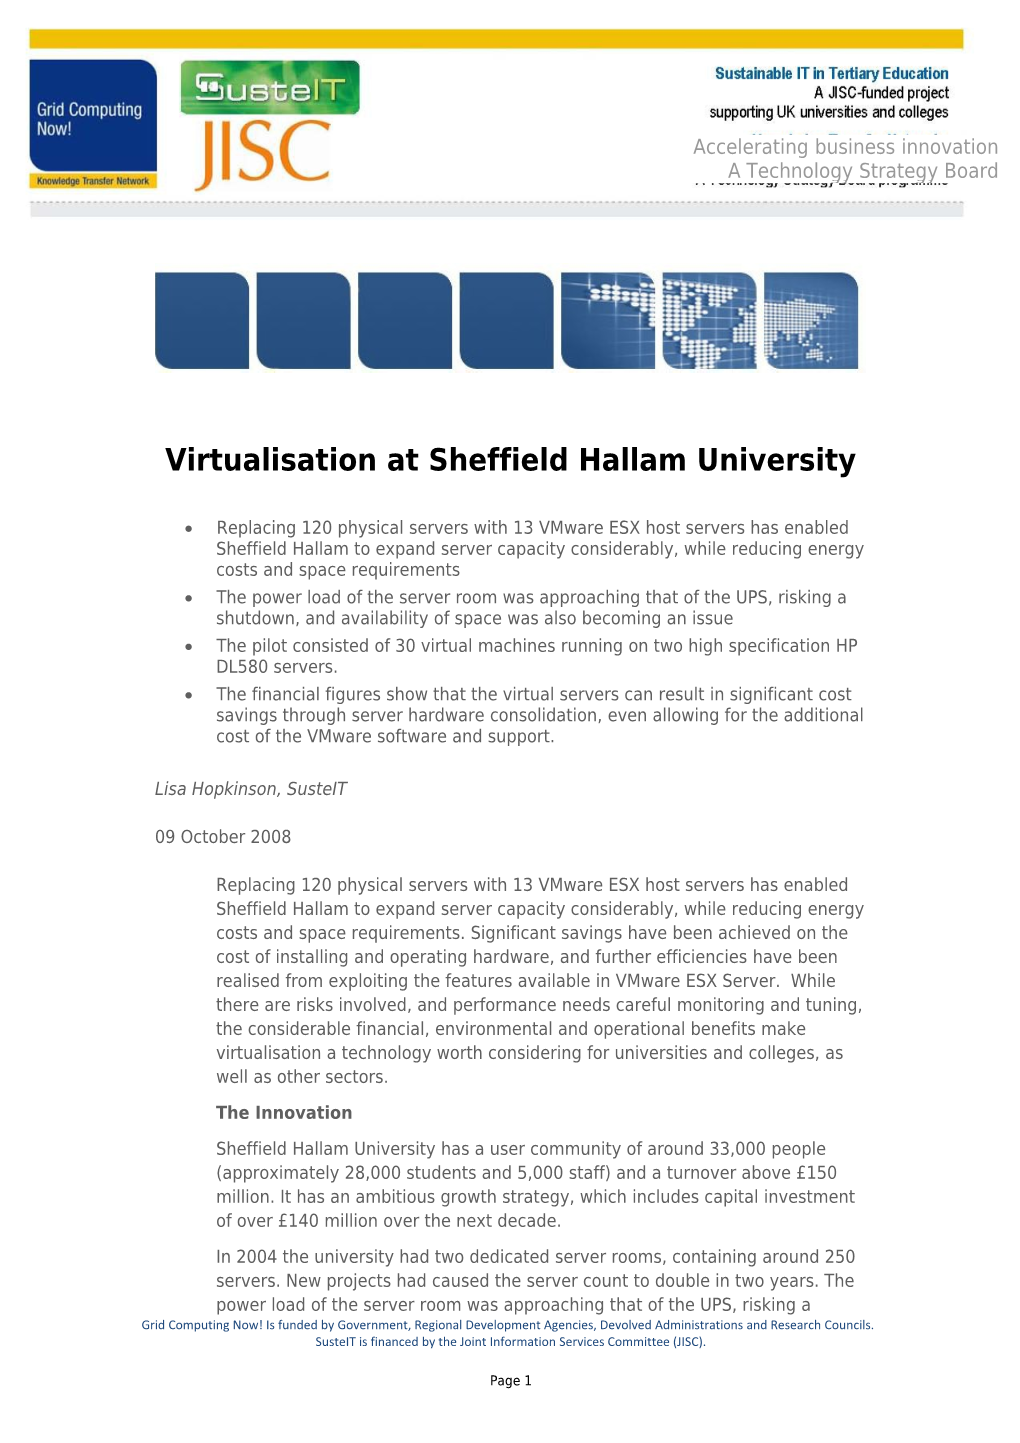 Virtualisation at Sheffieldhallamuniversity